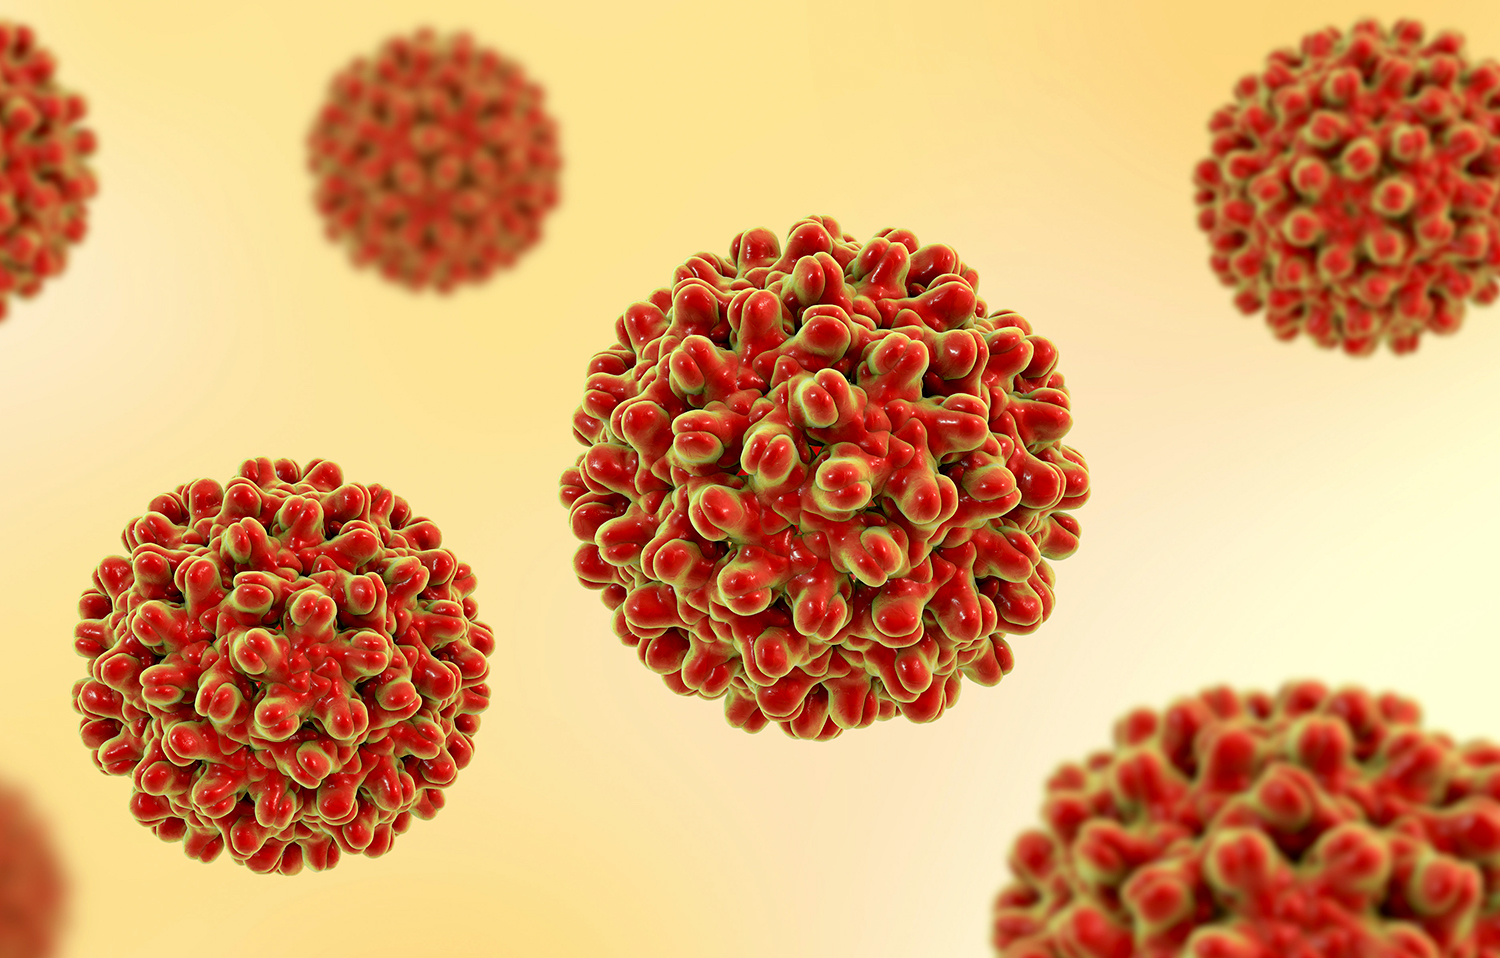 3D illustration of Hepatitis B virions